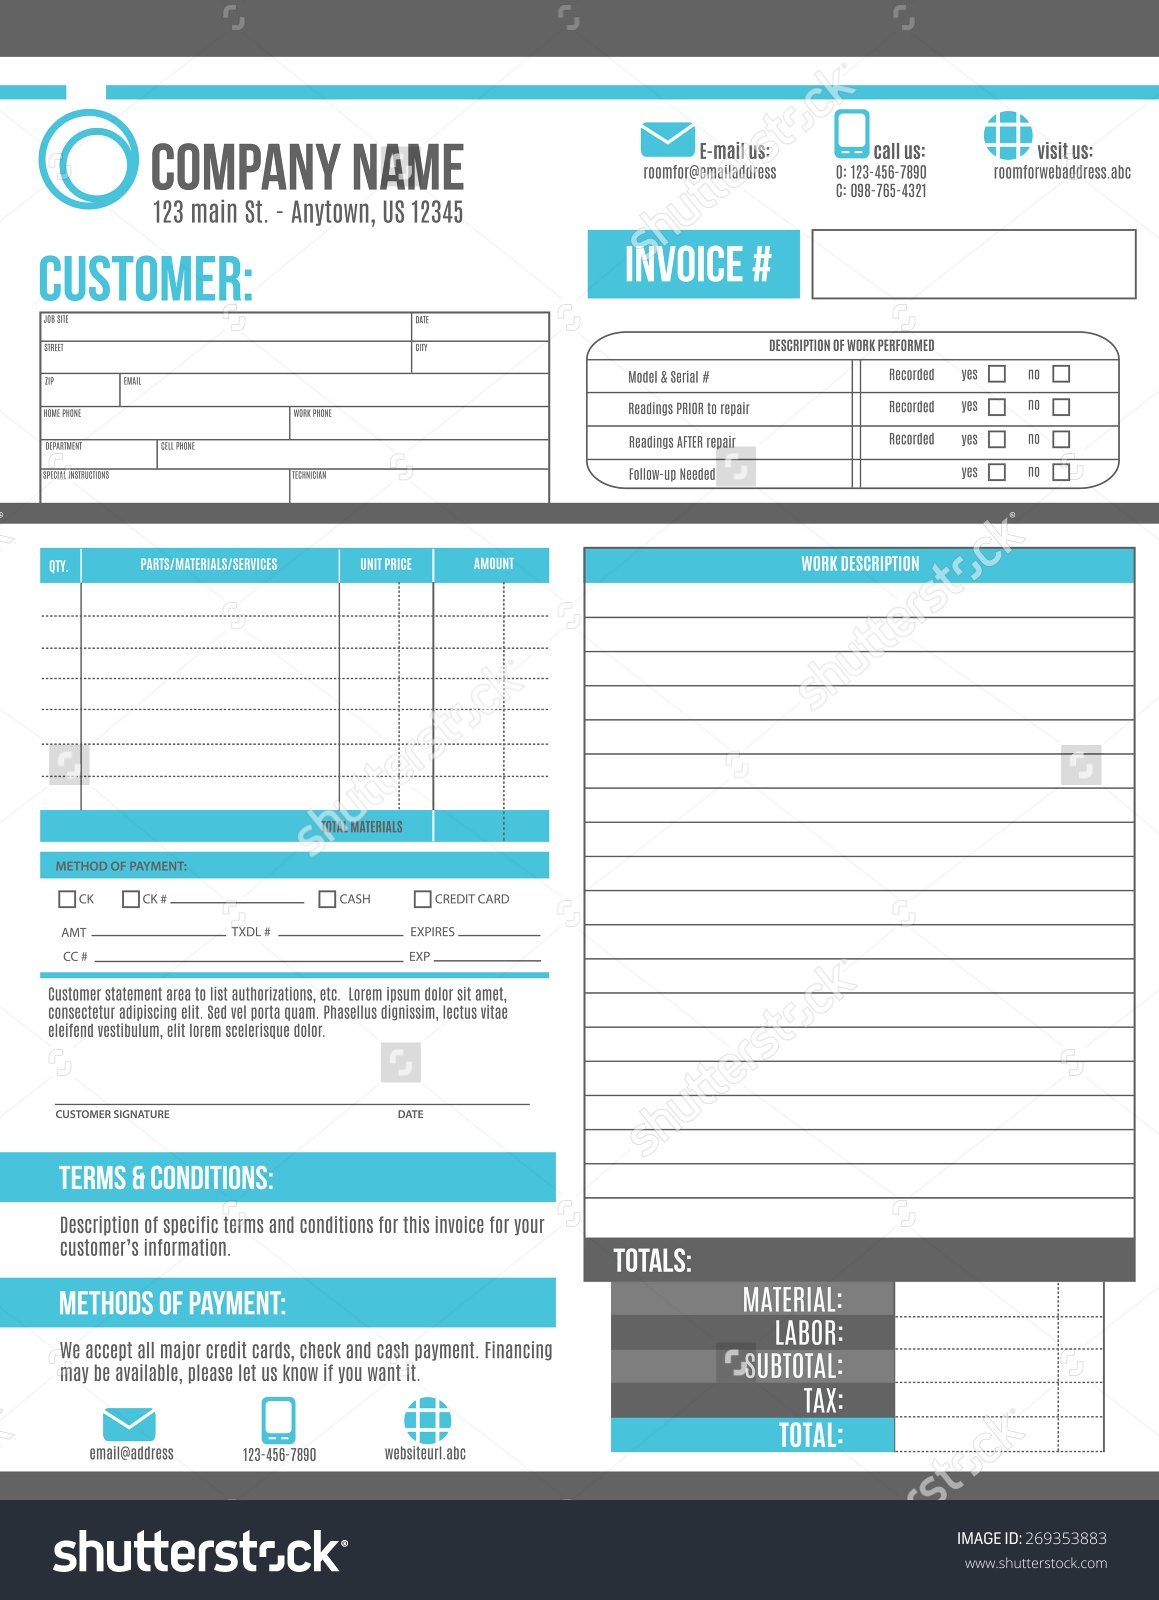 design an invoice free invoice design free printable service creative invoice template